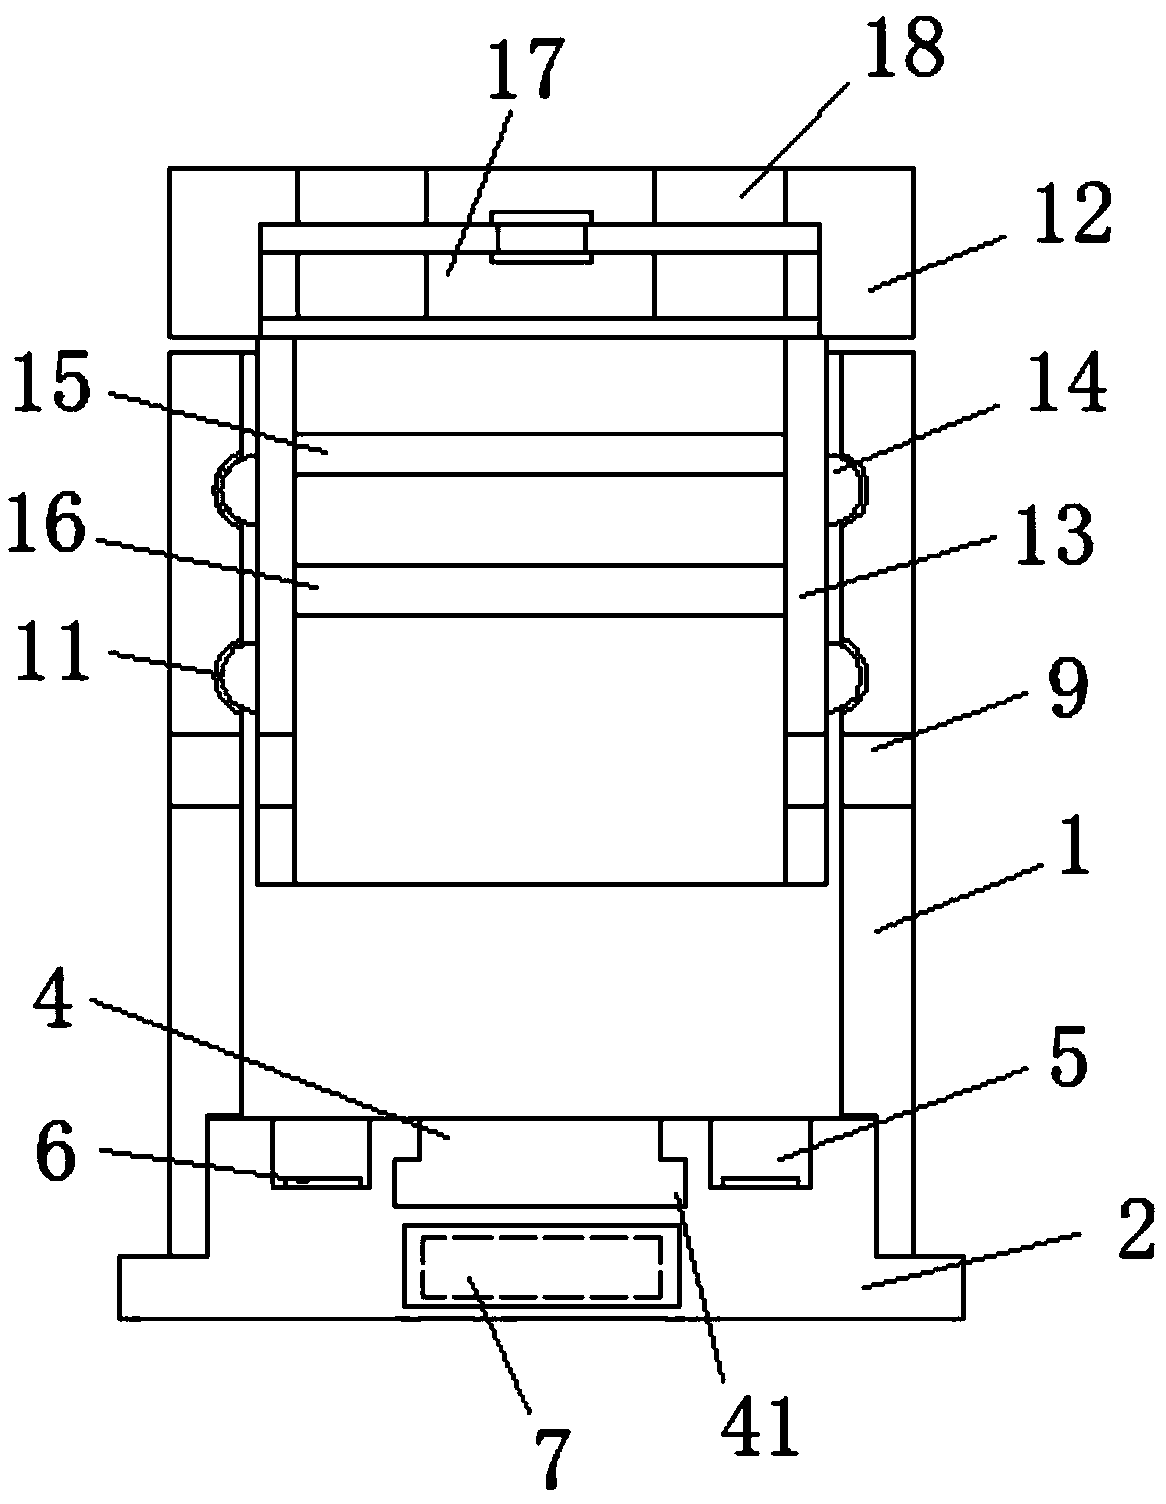 Temperature-controlled moxibustion box